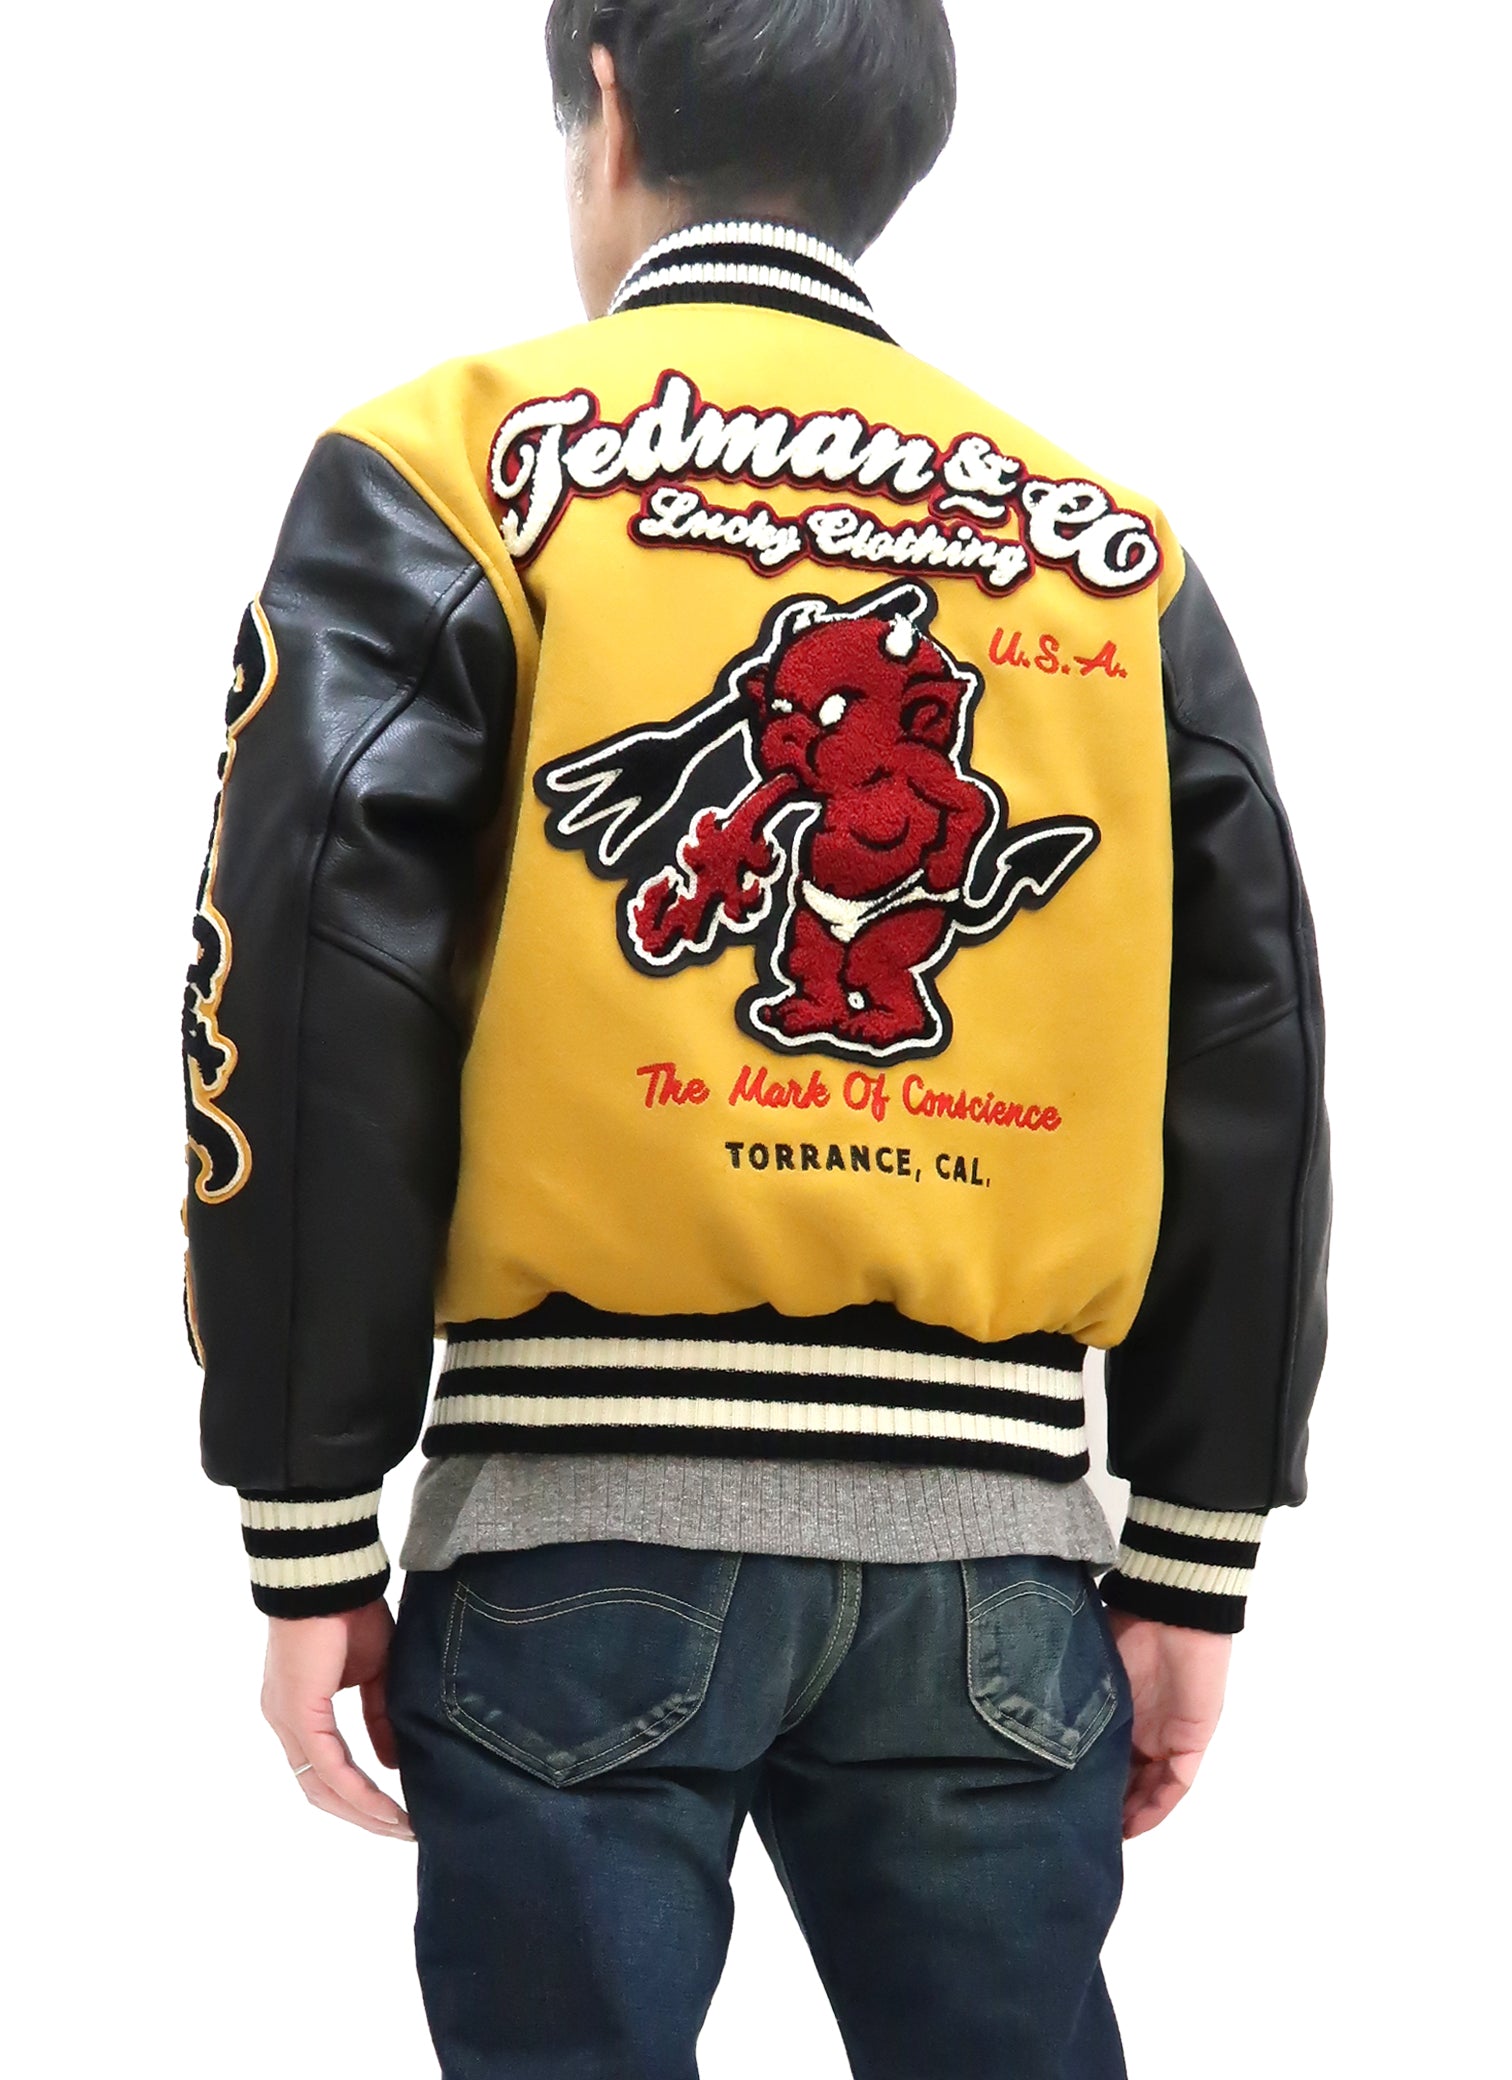 Chicago Bulls Lucky Leather Jacket (M) – Retro Windbreakers